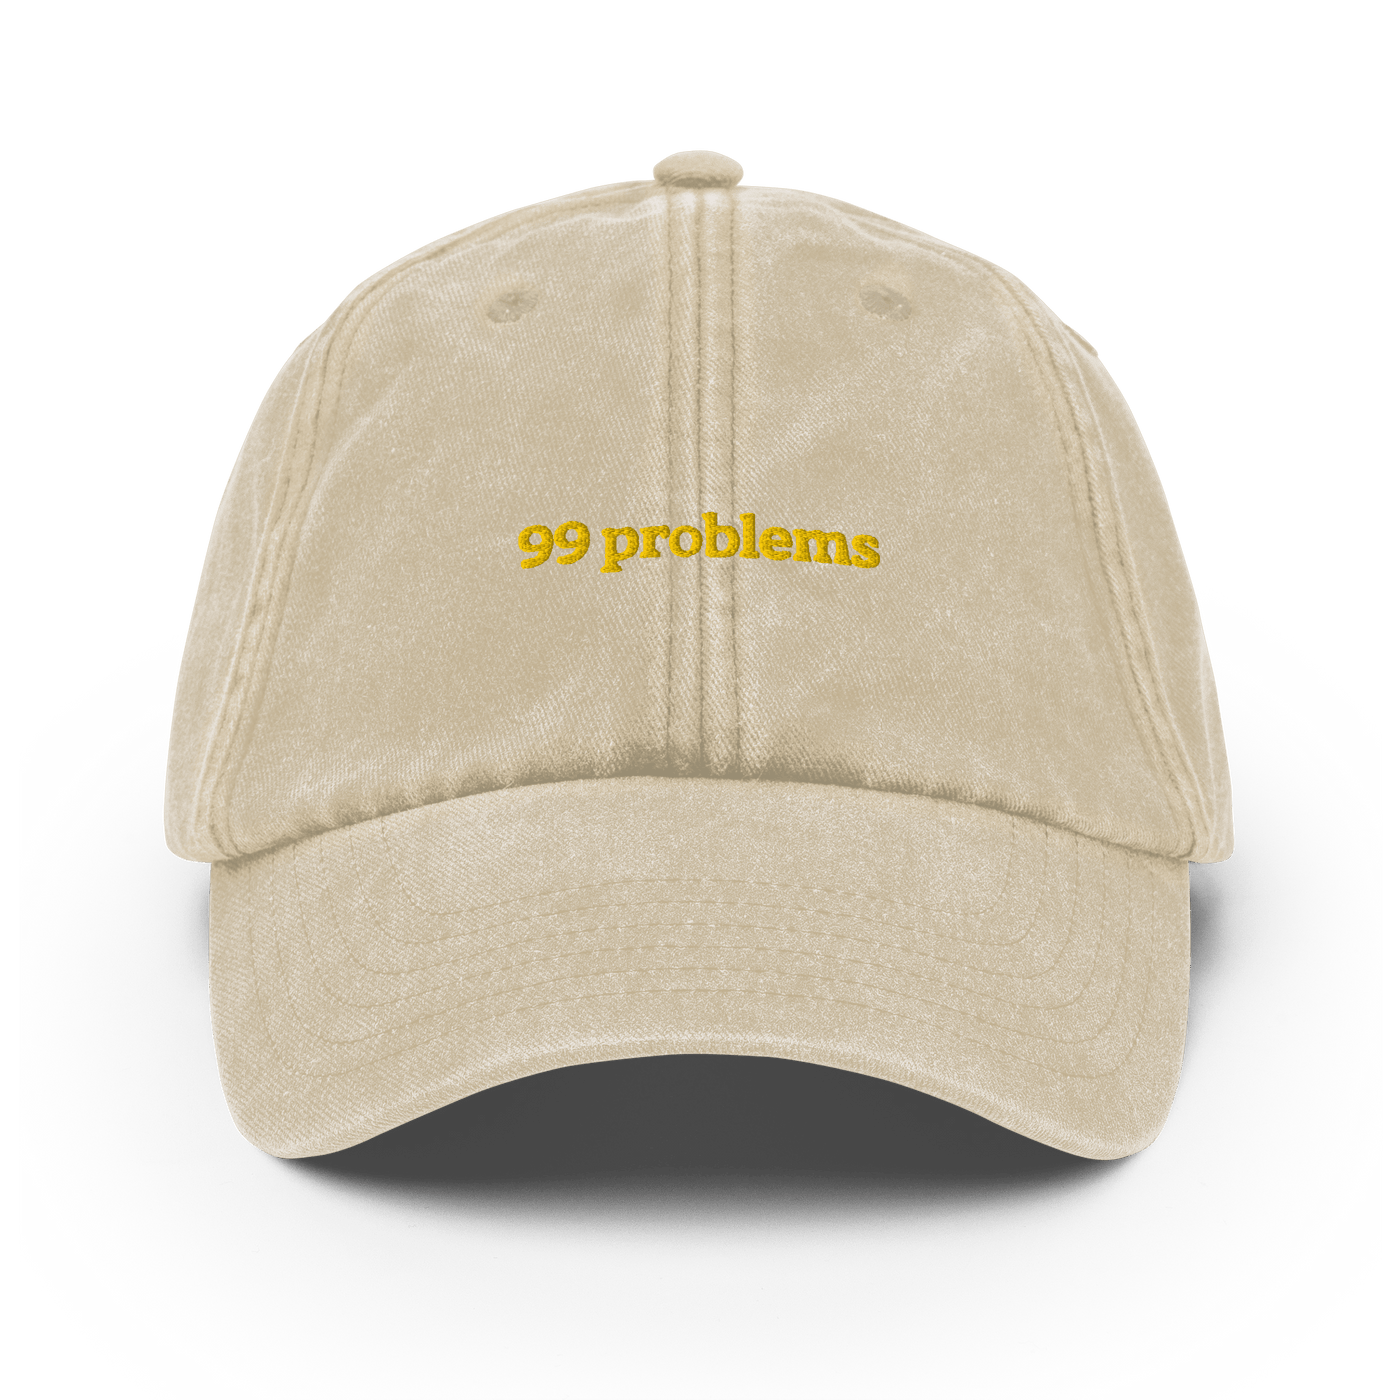 99 problems Vintage Hat - Vintage Stone - - Just Another Cap Store